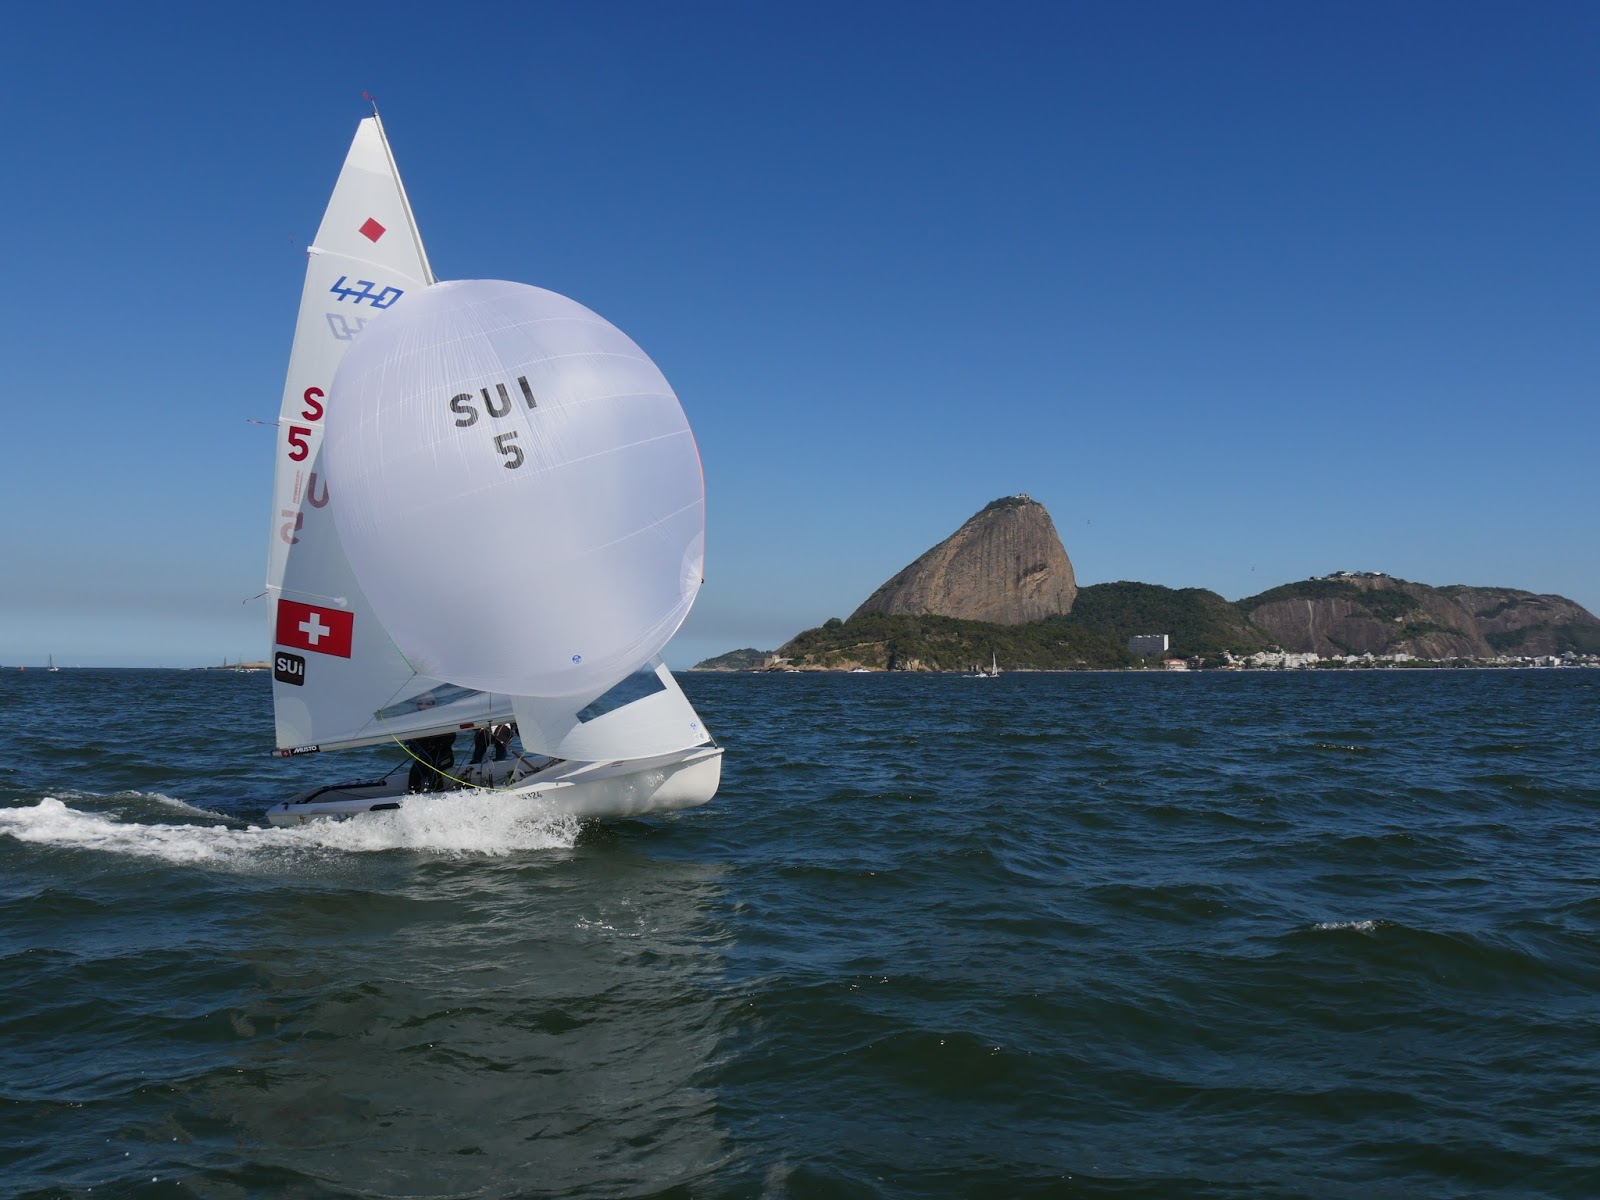  Olympic Games  Rio de Janeiro BRA  Unsere Sonderberichterstattung